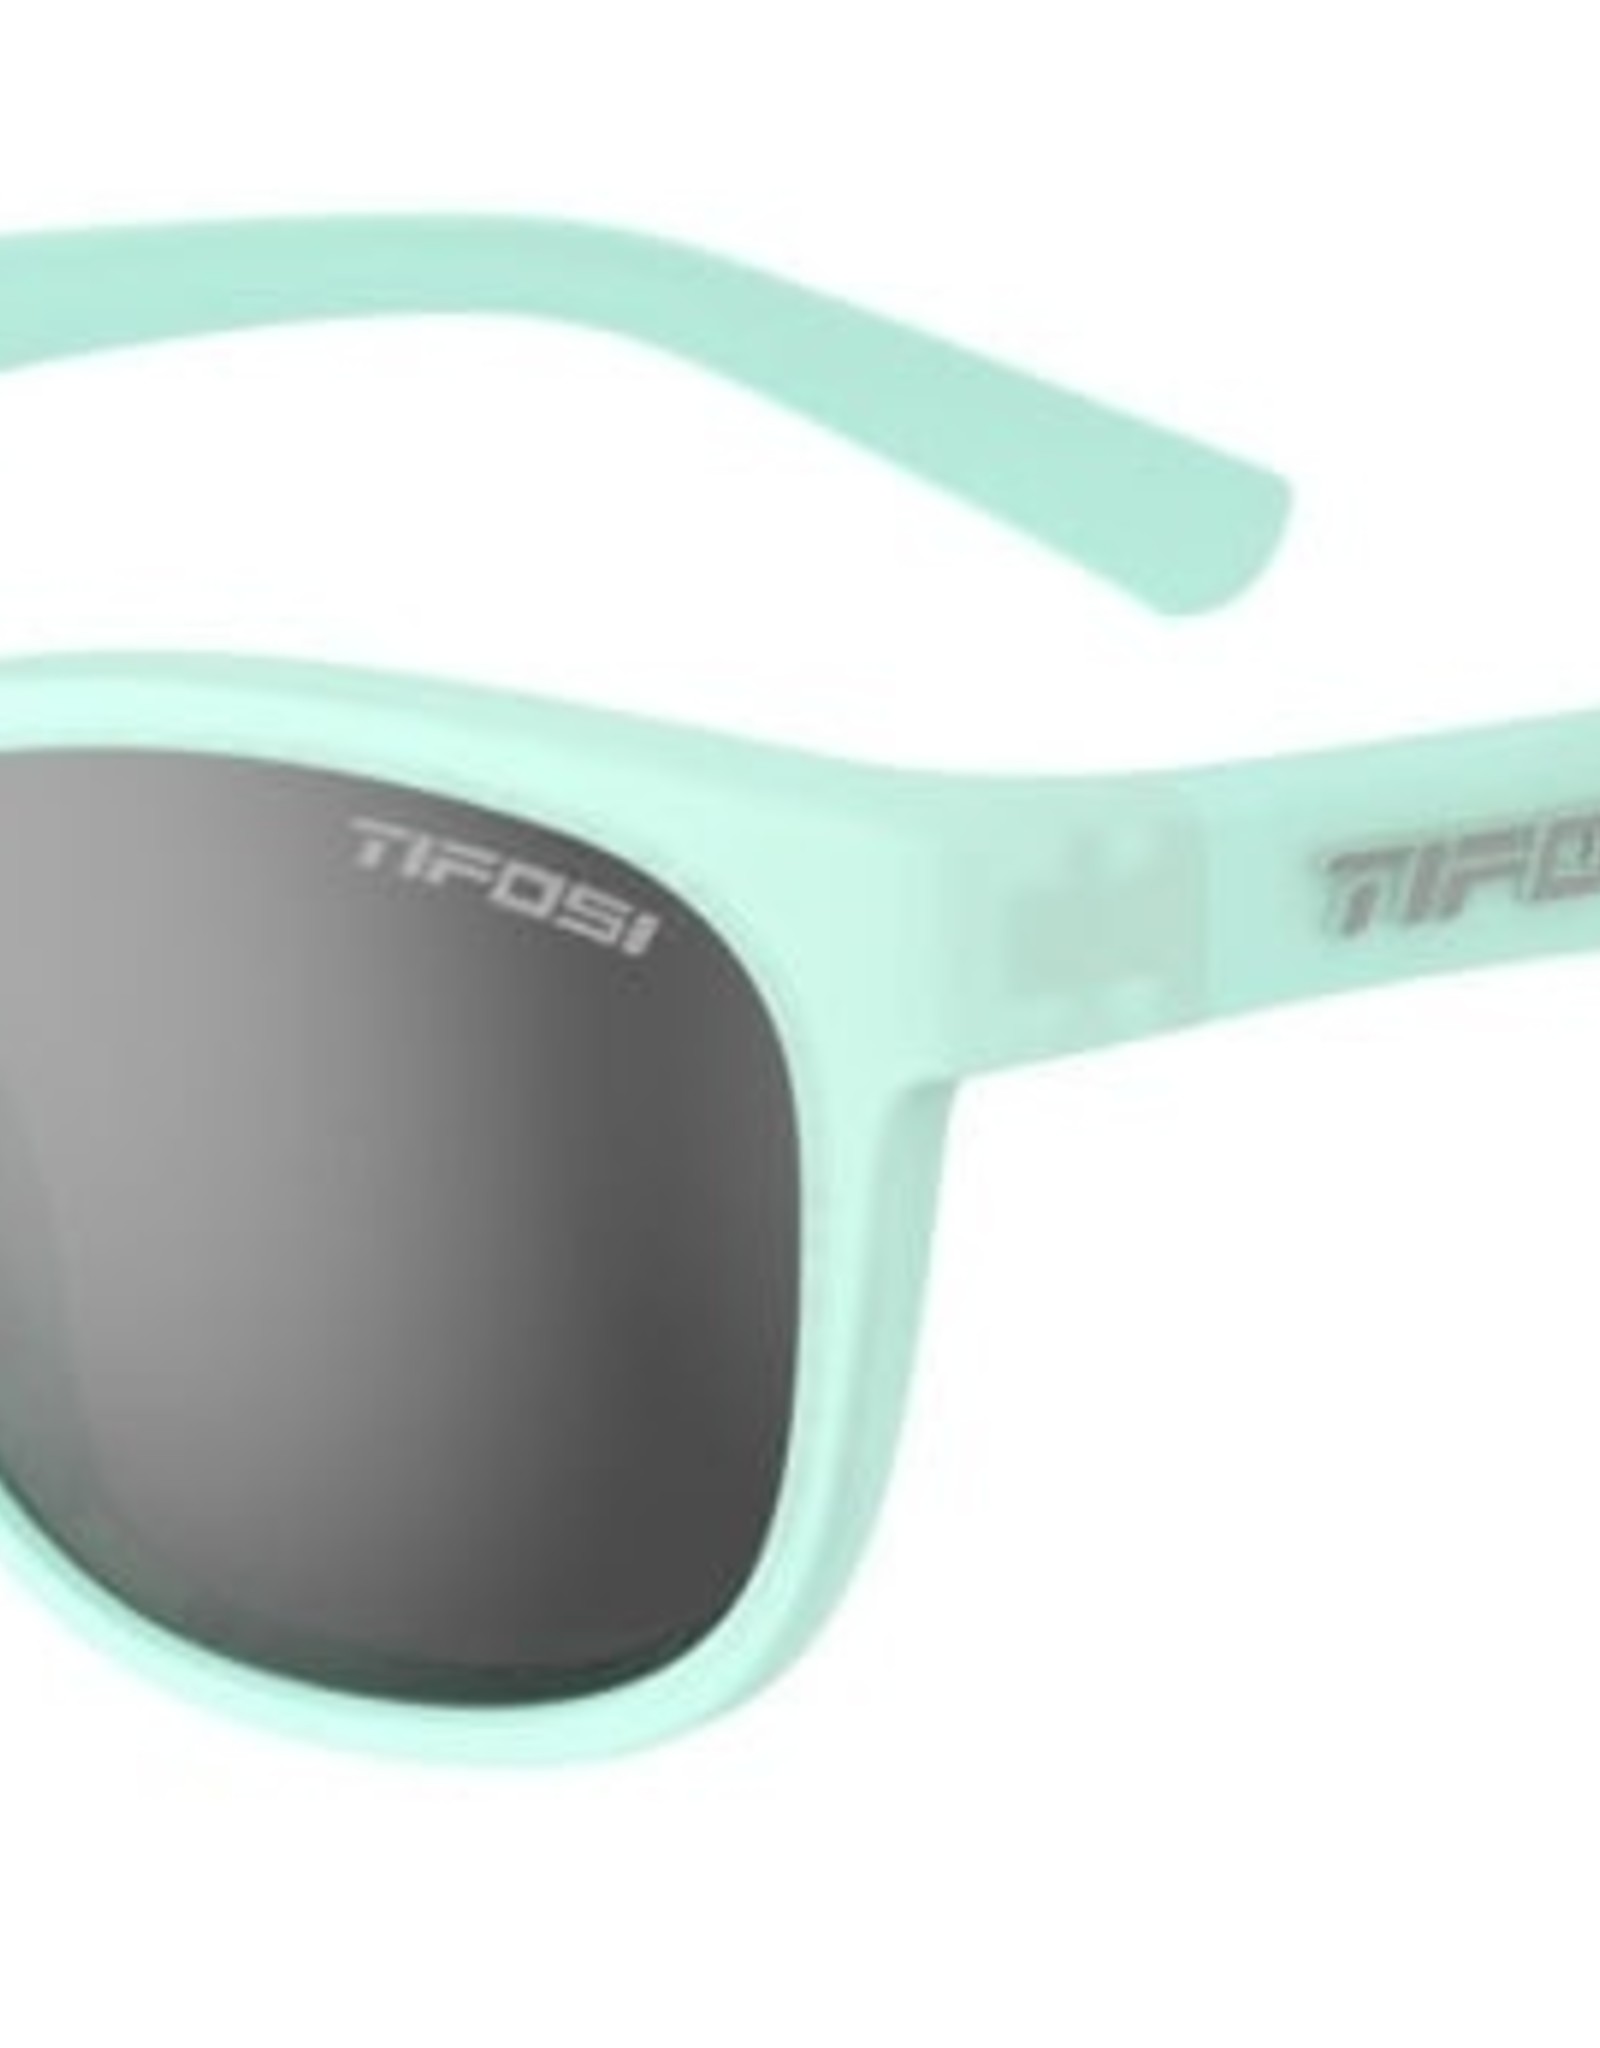 Tifosi Optics Swank, Satin Crystal Teal Polarized Sunglasses - Smoke Polarized